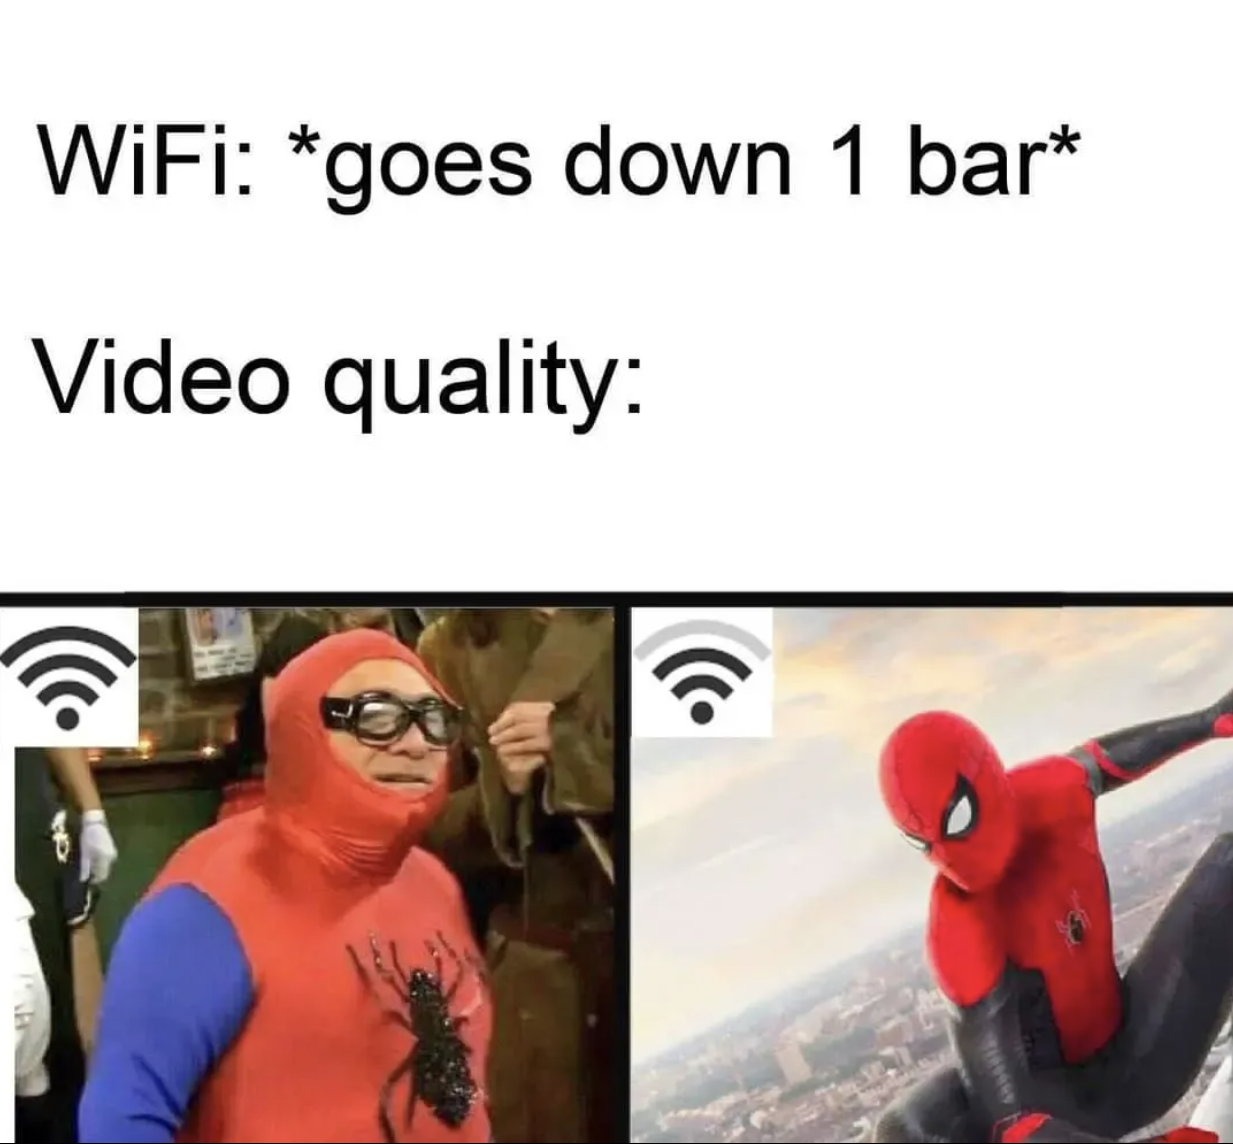 It's Always Sunny in Philadelphia memes - arm - WiFi goes down 1 bar Video quality